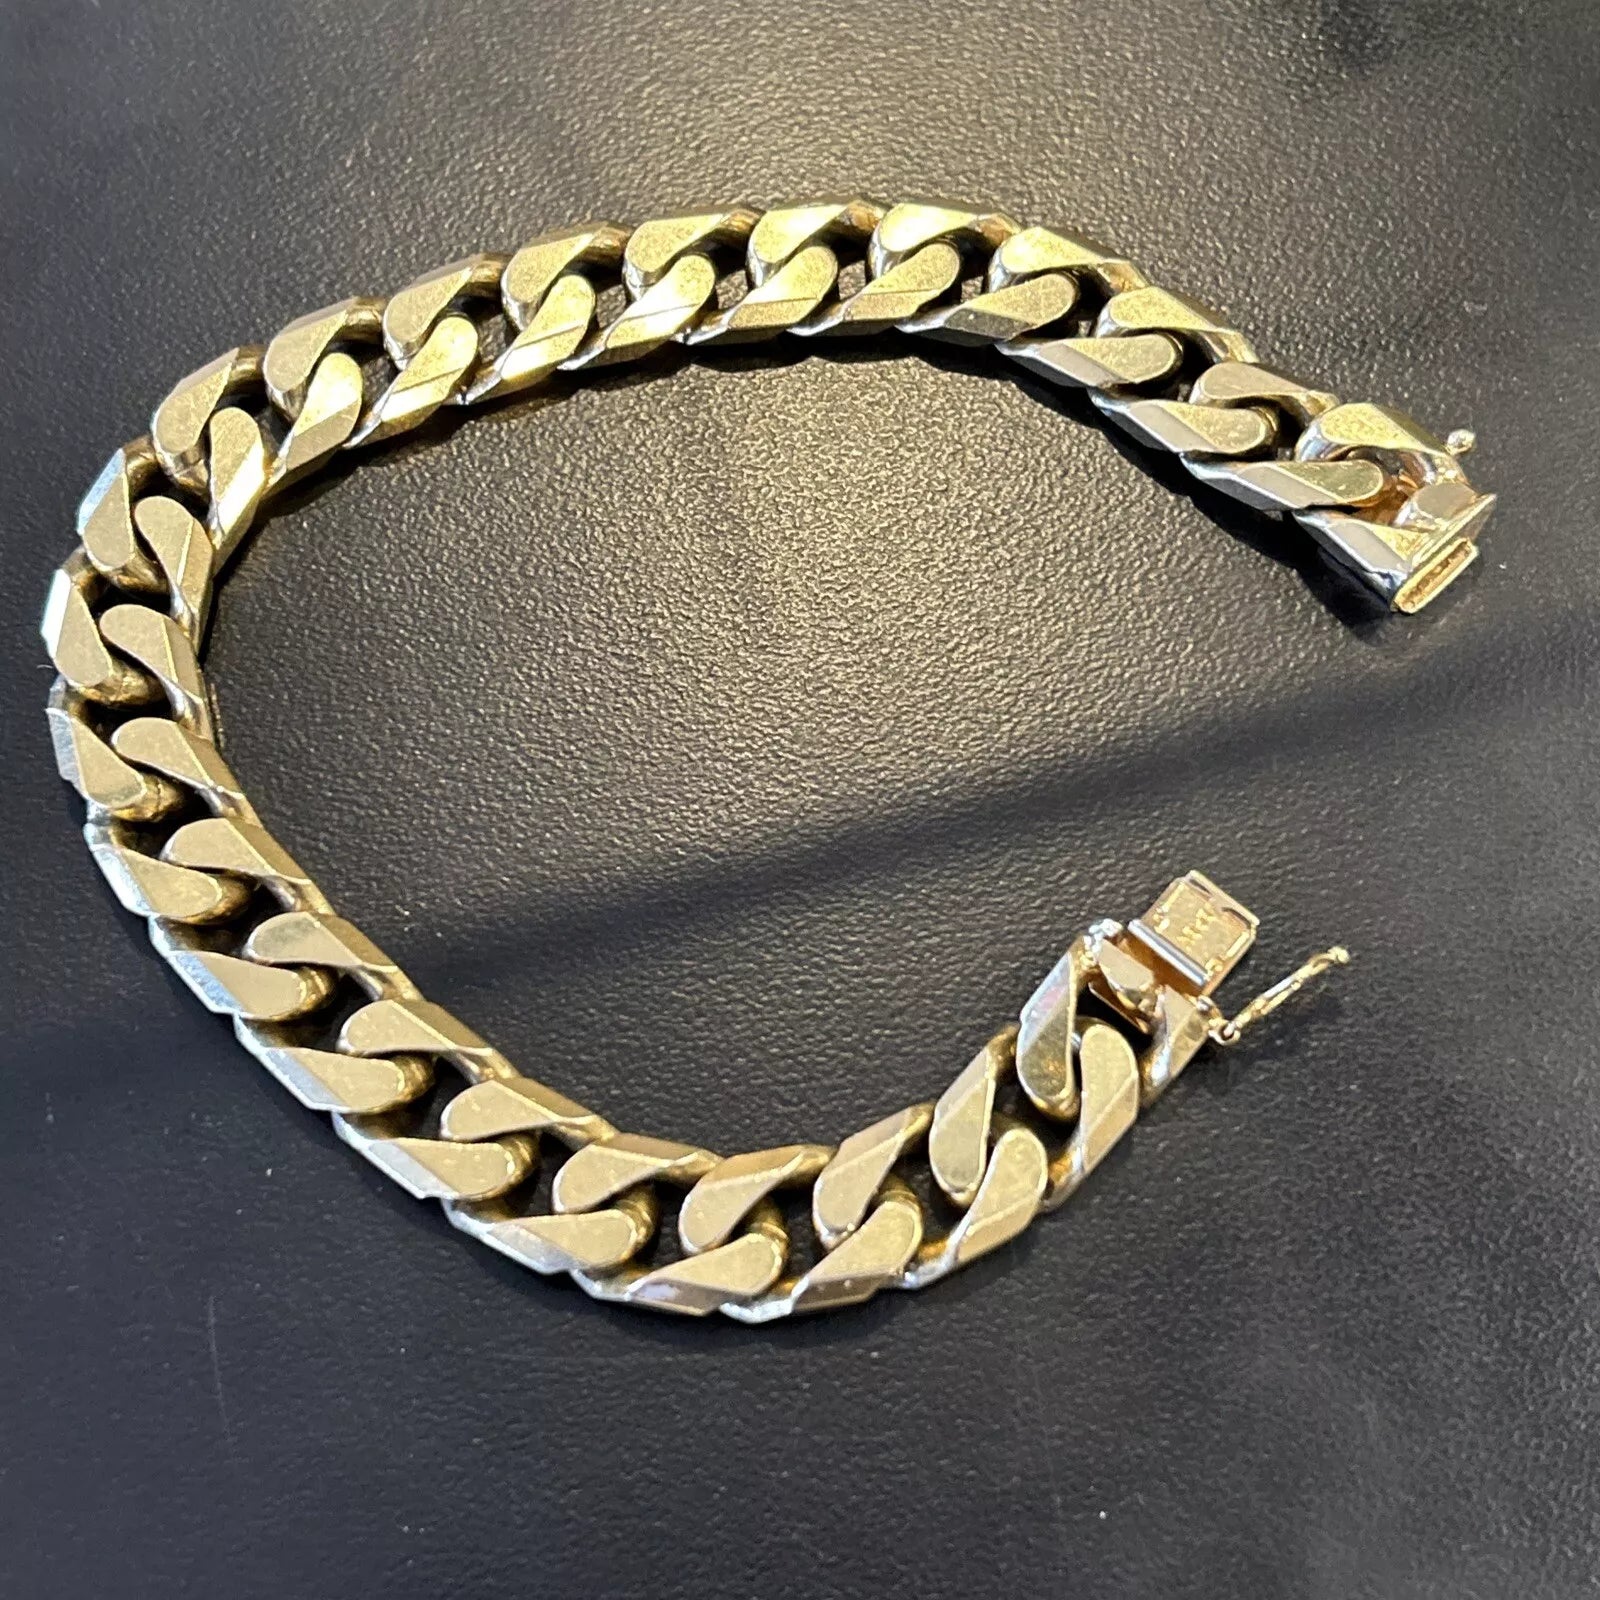 14k Solid Gold UNOAERRE Cuban Link Bracelet -8.5 Inches - 66.2 grams - 10.2mm